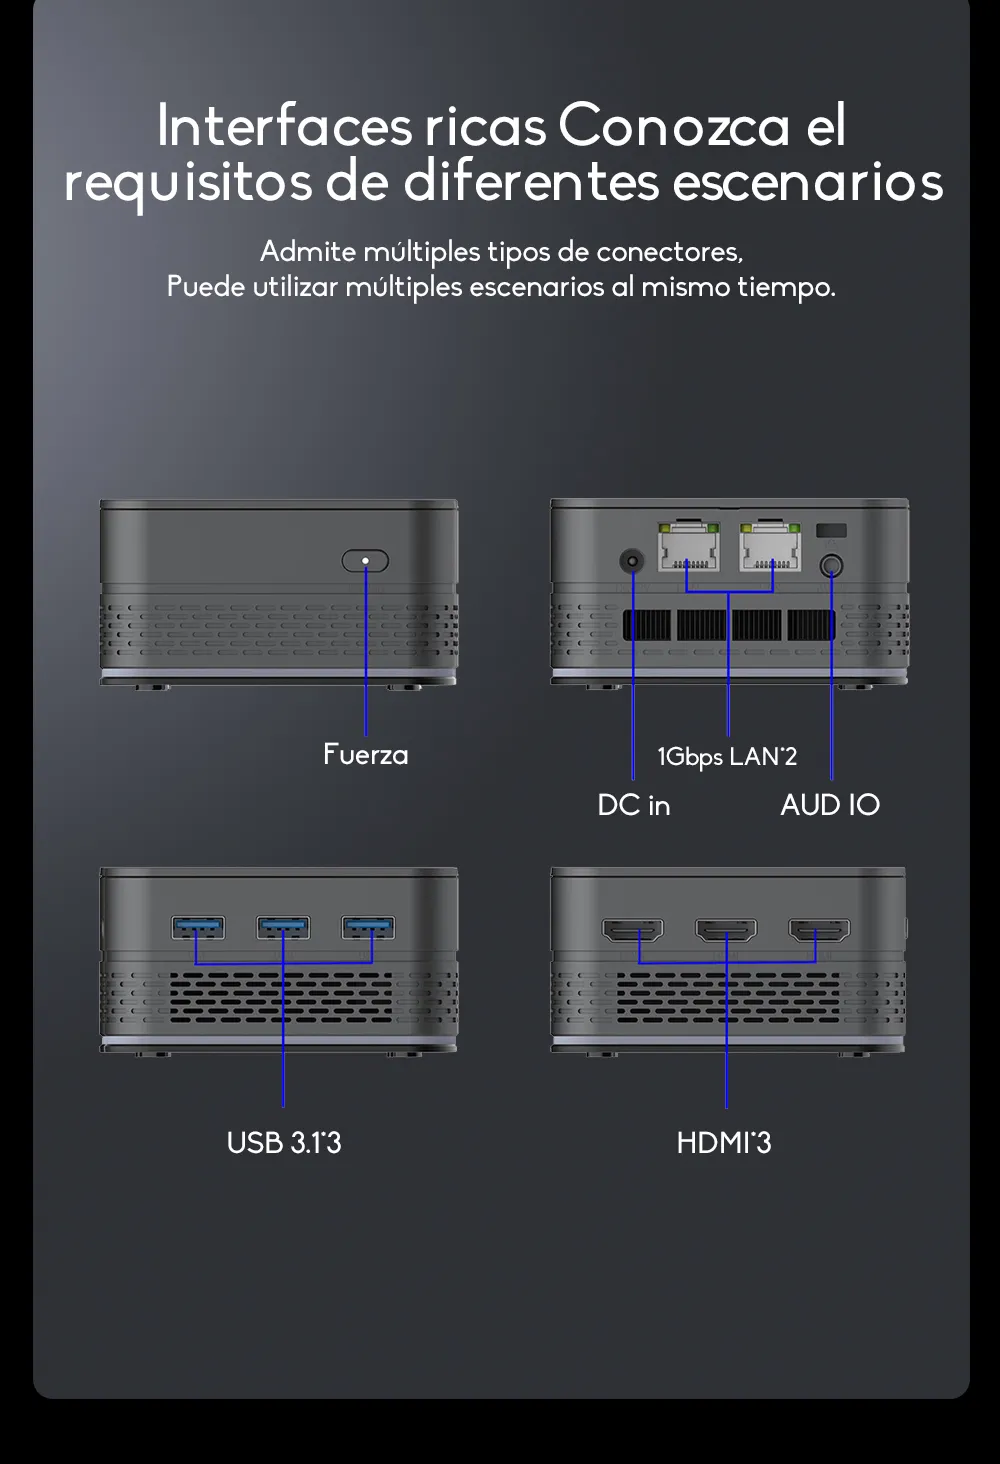 Ninkear-Mini PC T9, Intel Alder Lake N100, 8GB/16GB, DDR5, 256G/1TB, Windows 11, ordenador de bolsillo Ultra pequeño, Dual LAN, tres HDMI